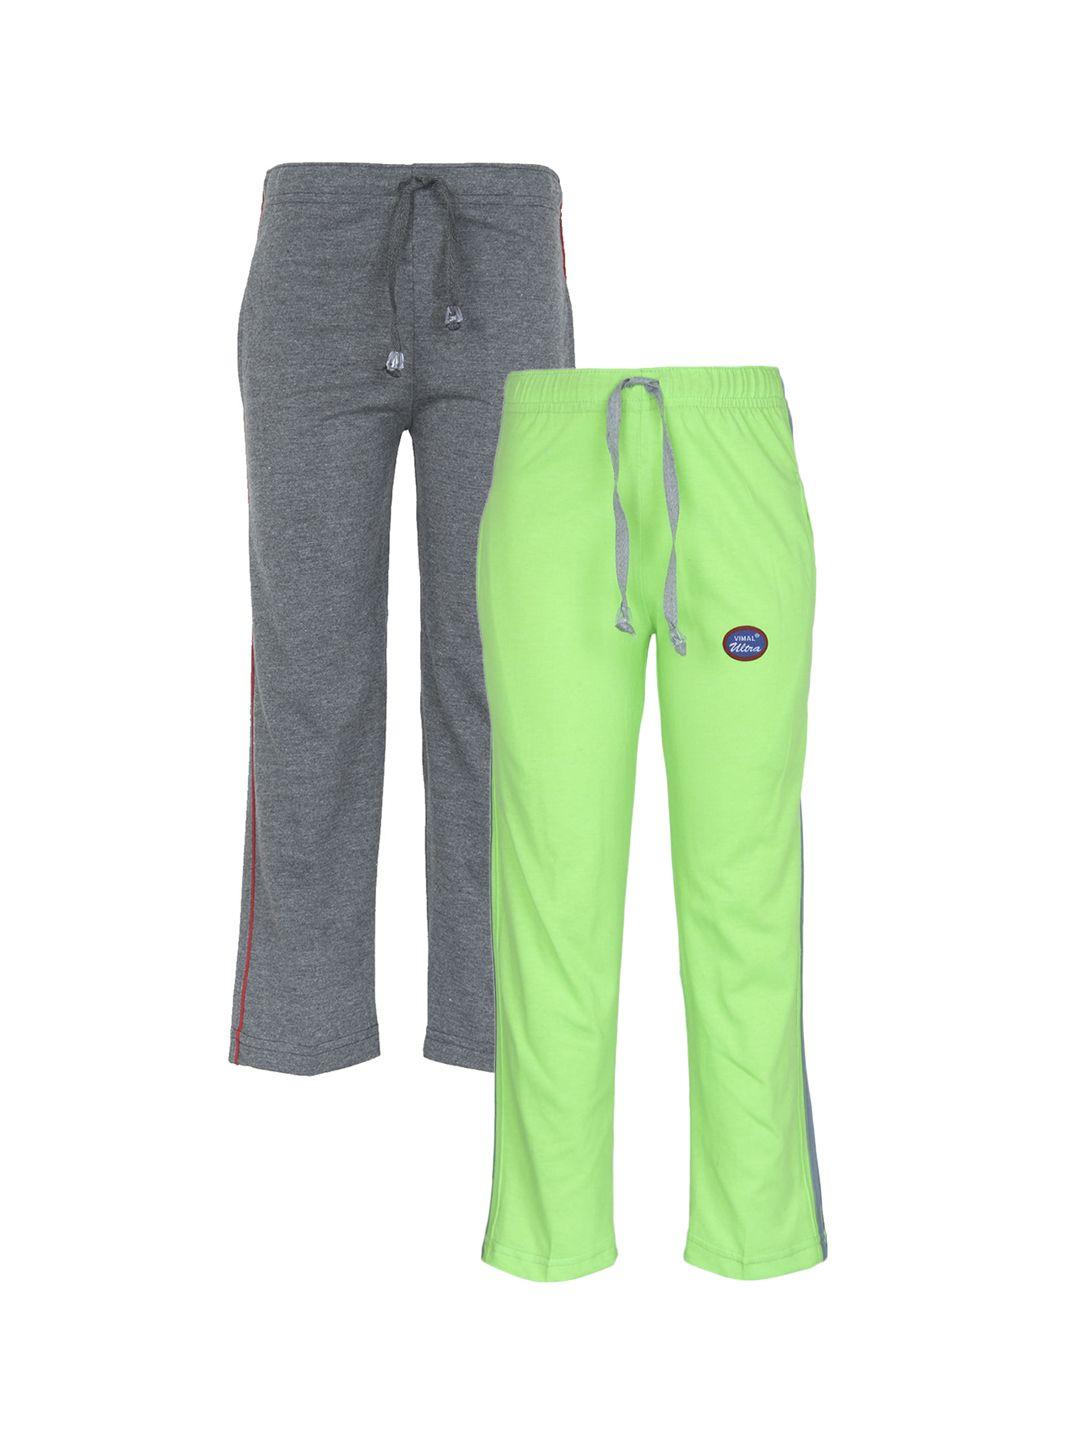 vimal jonney unisex kids pack of 2 grey & fluorescent green track pants